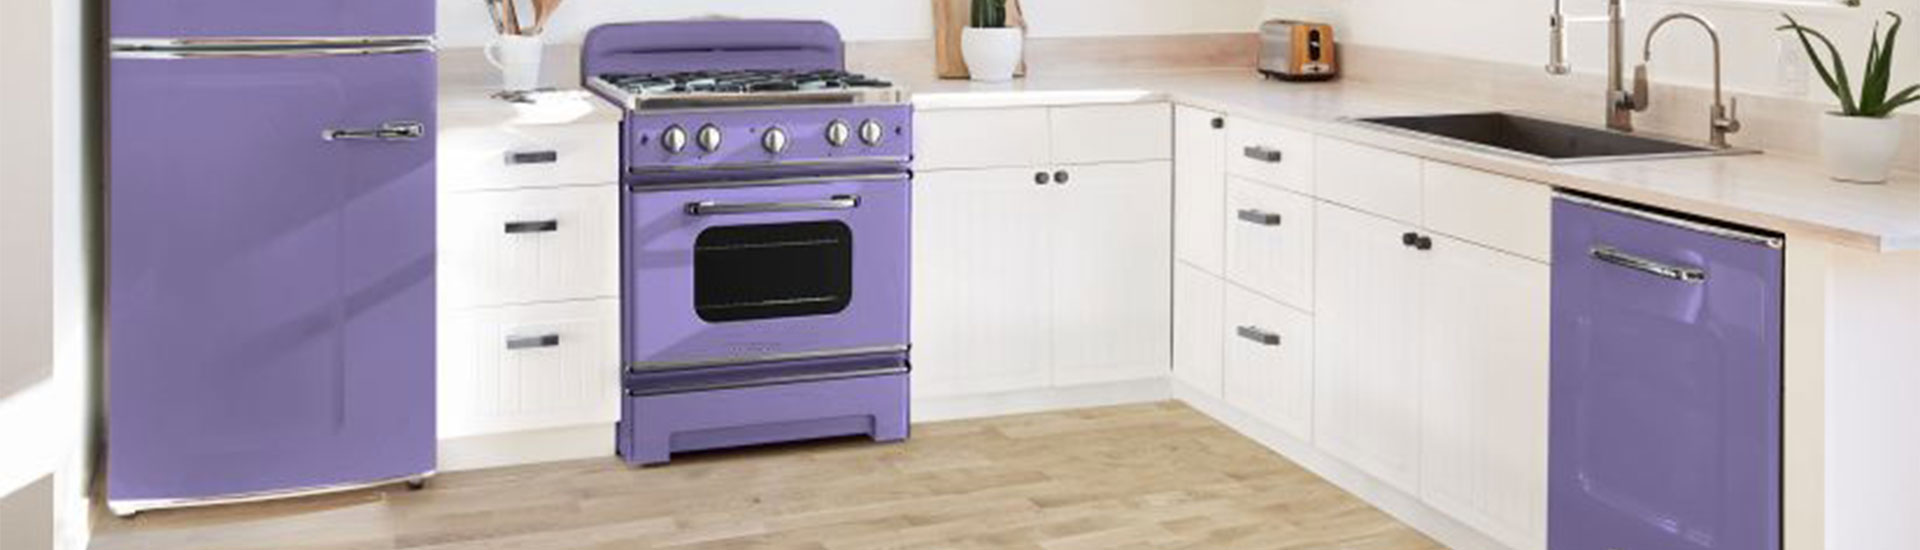 Purple Refrigerator Wraps